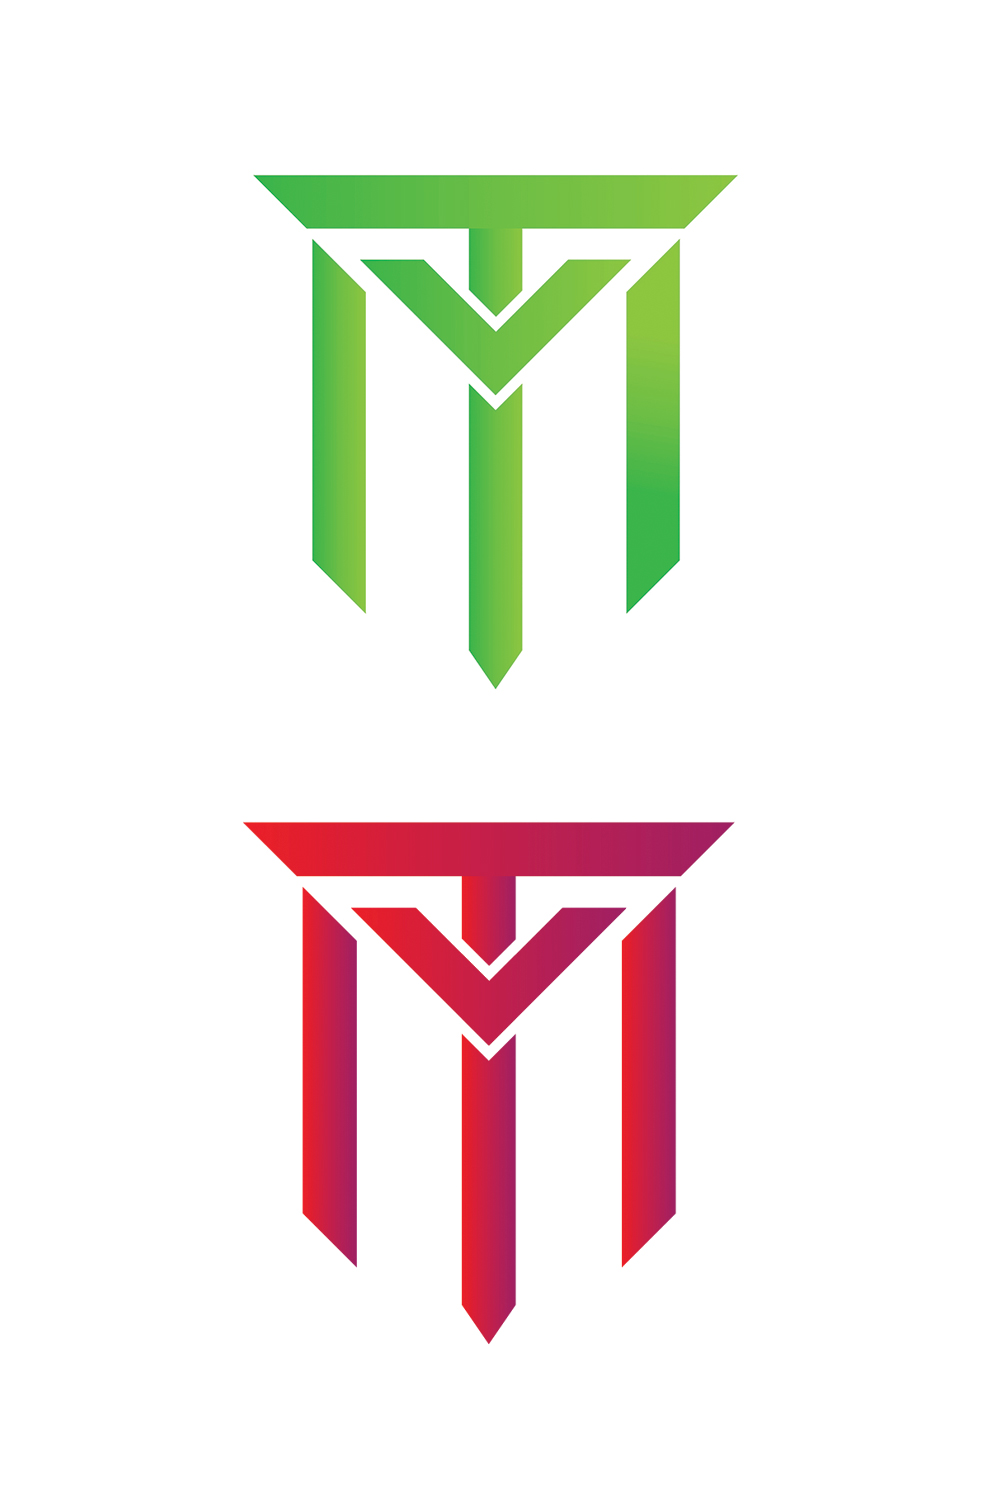 MT Letter Logo Design pinterest image.